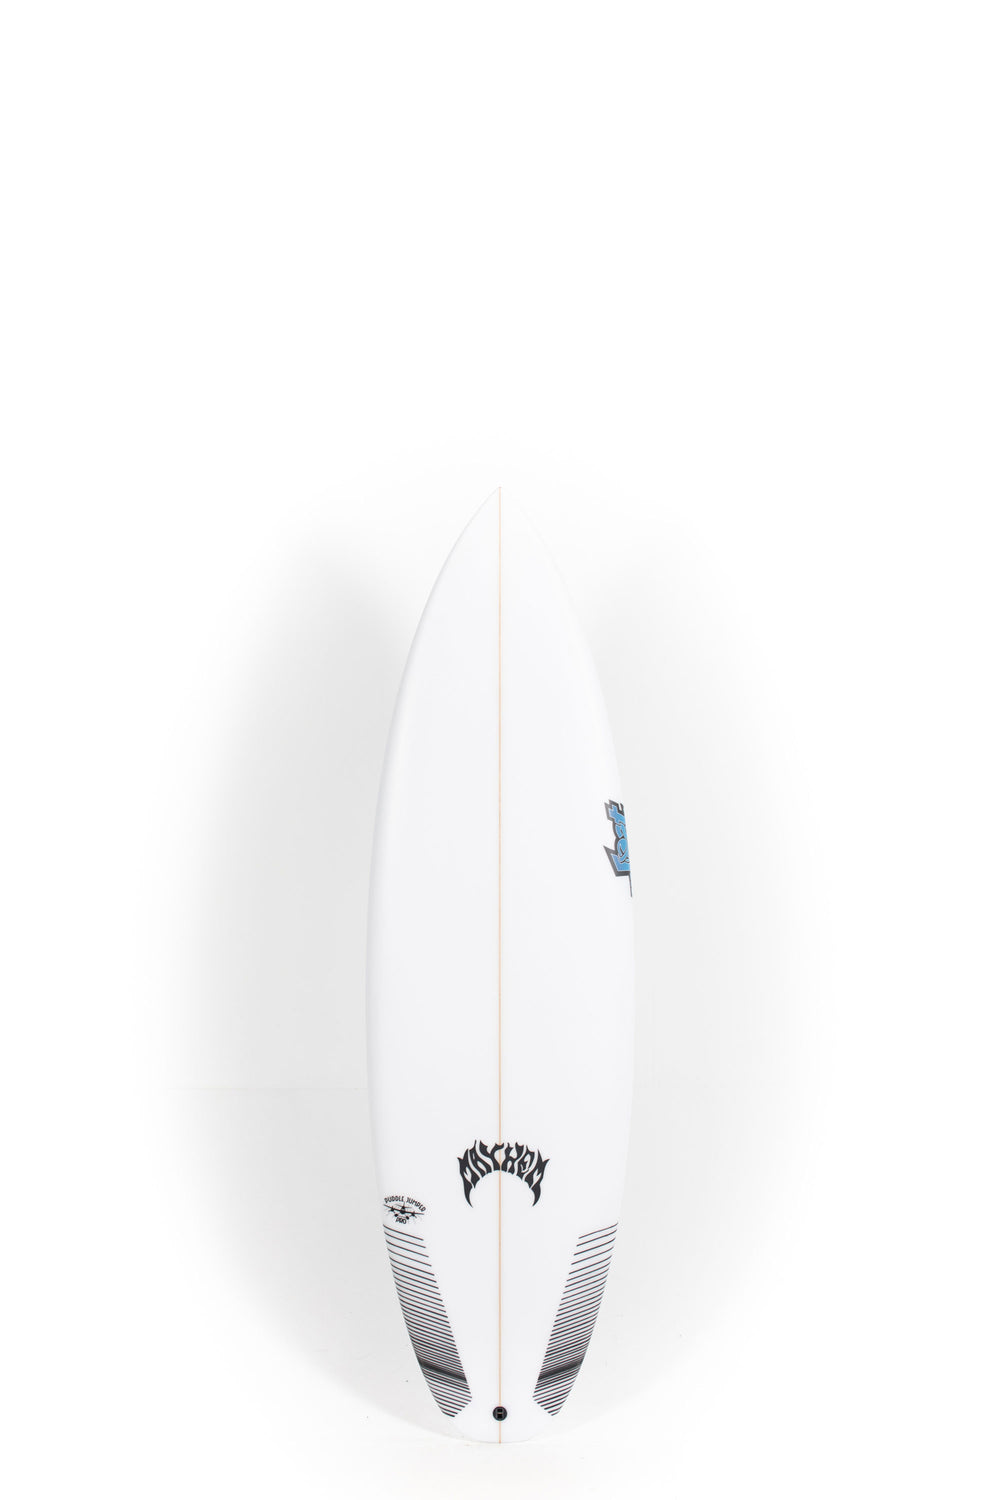 Pukas Surf Shop - Lost Surfboard - PUDDLE JUMPER-PRO by Matt Biolos - 5'10